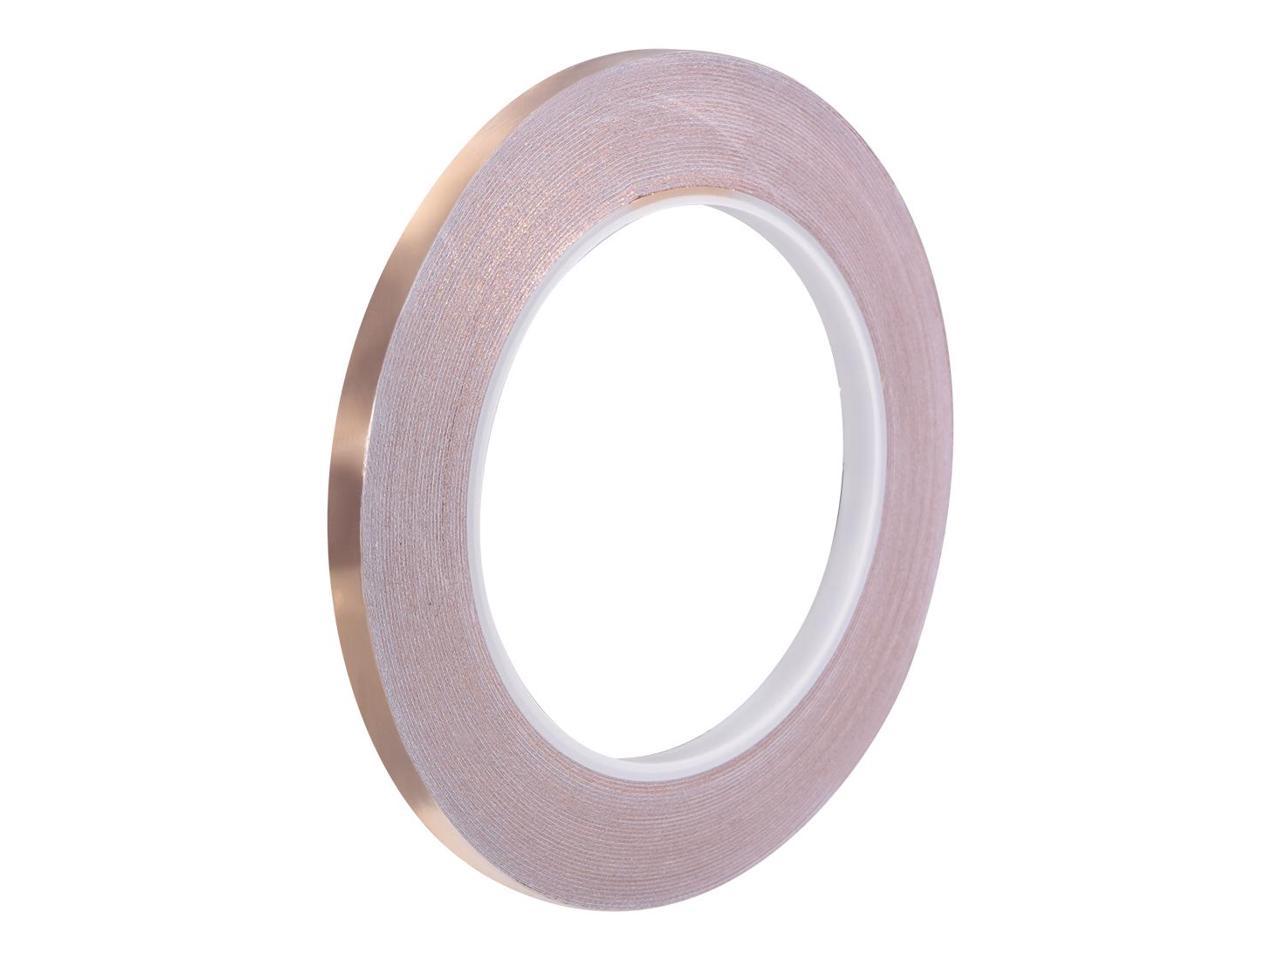 Single-Sided Conductive Tape Copper Foil Tape 4mm/6mm x 30m/98.4ft 2pcs 